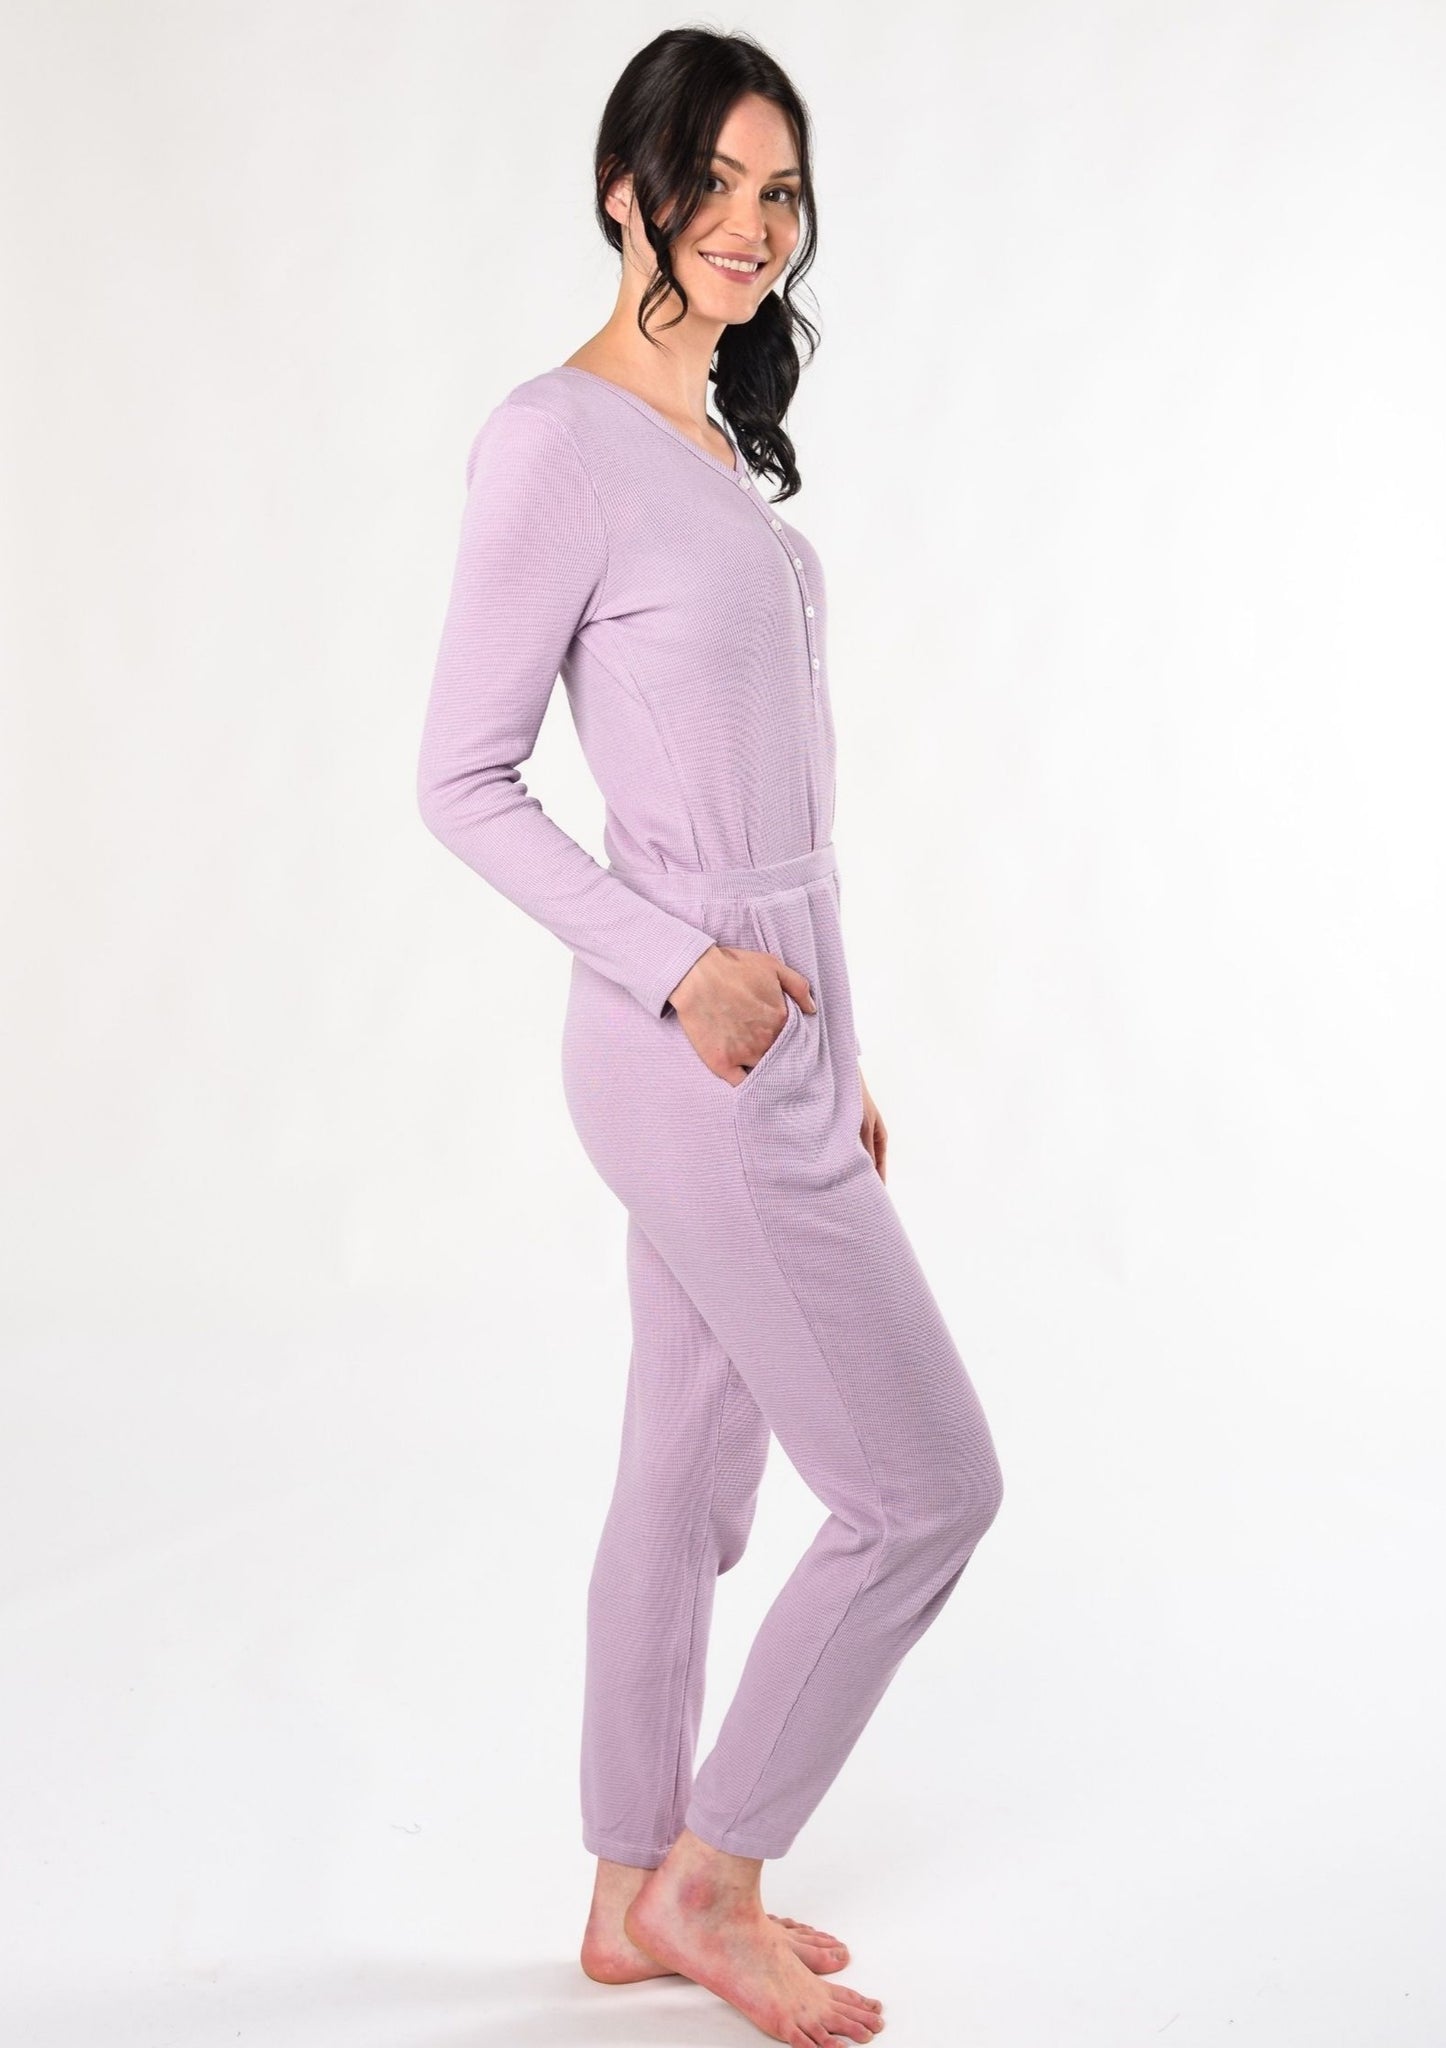 Ladies pijama set long sleeve viscon, Women's clothing